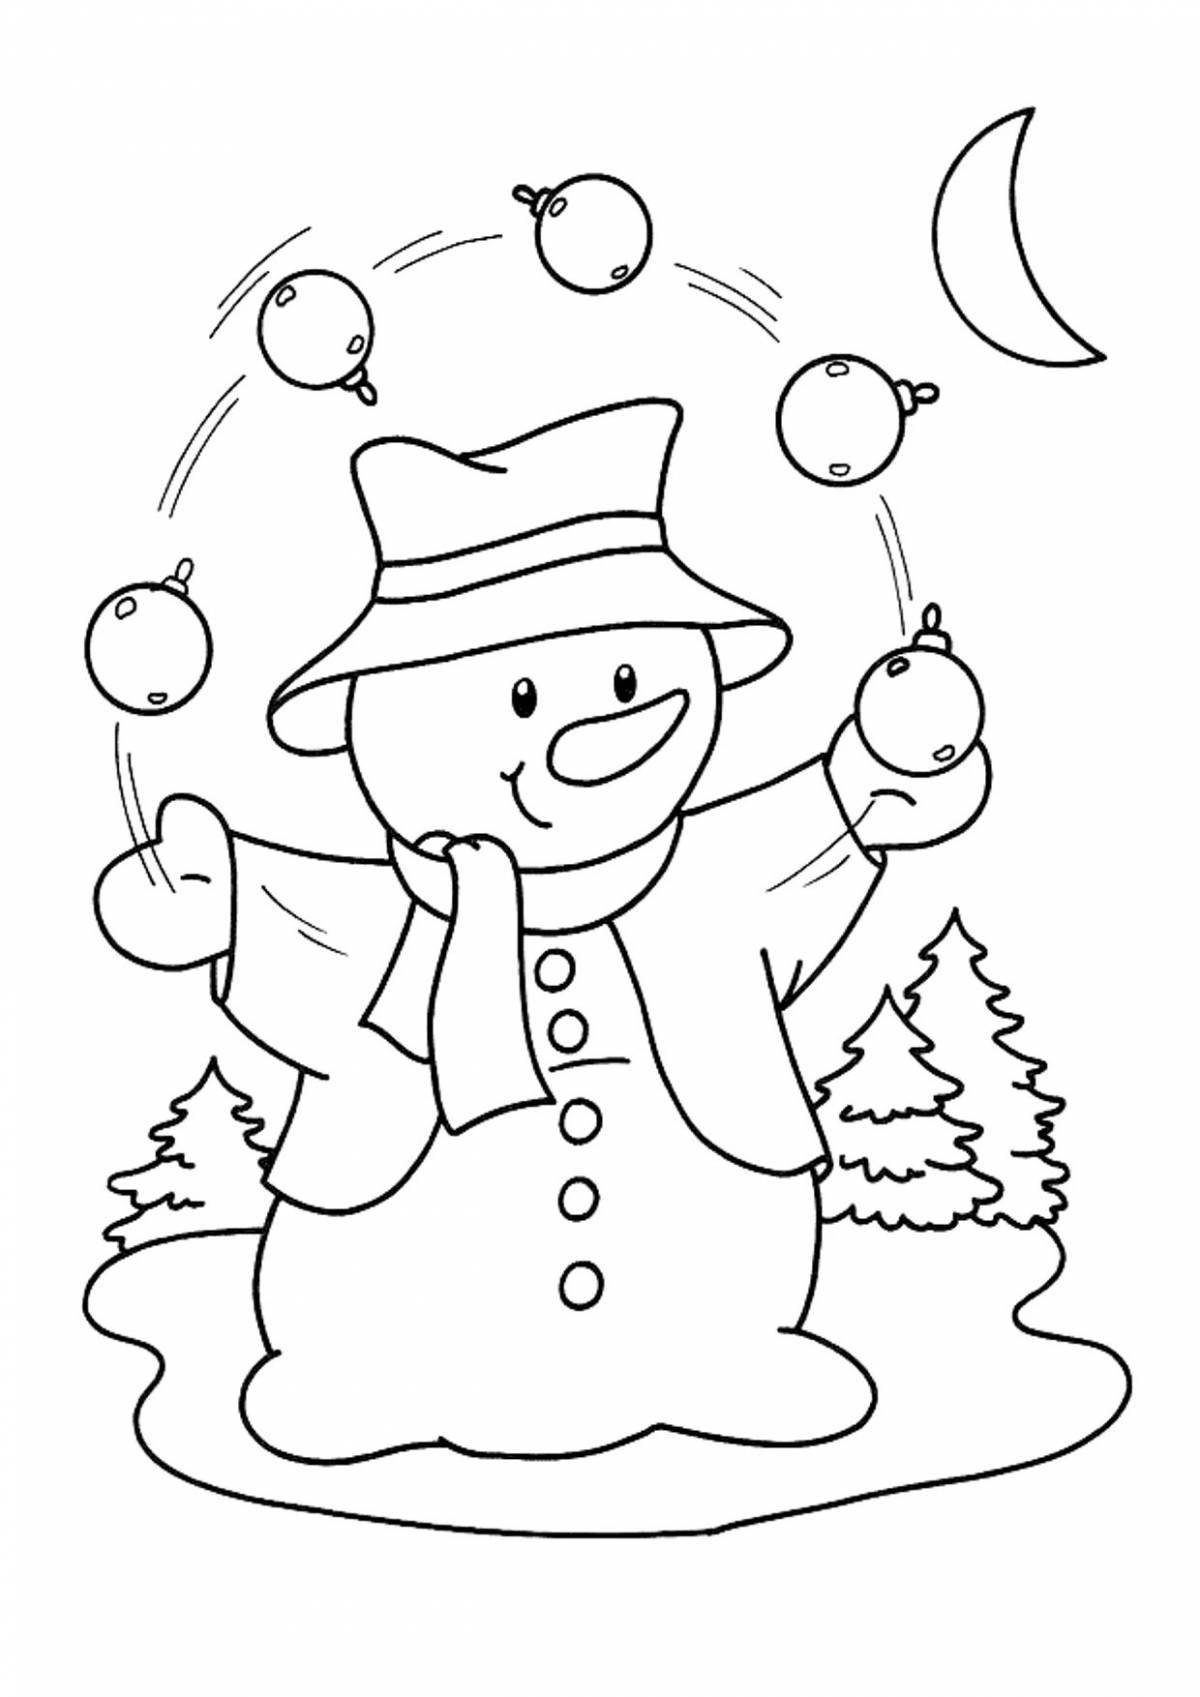 Joyful coloring funny snowman for kids